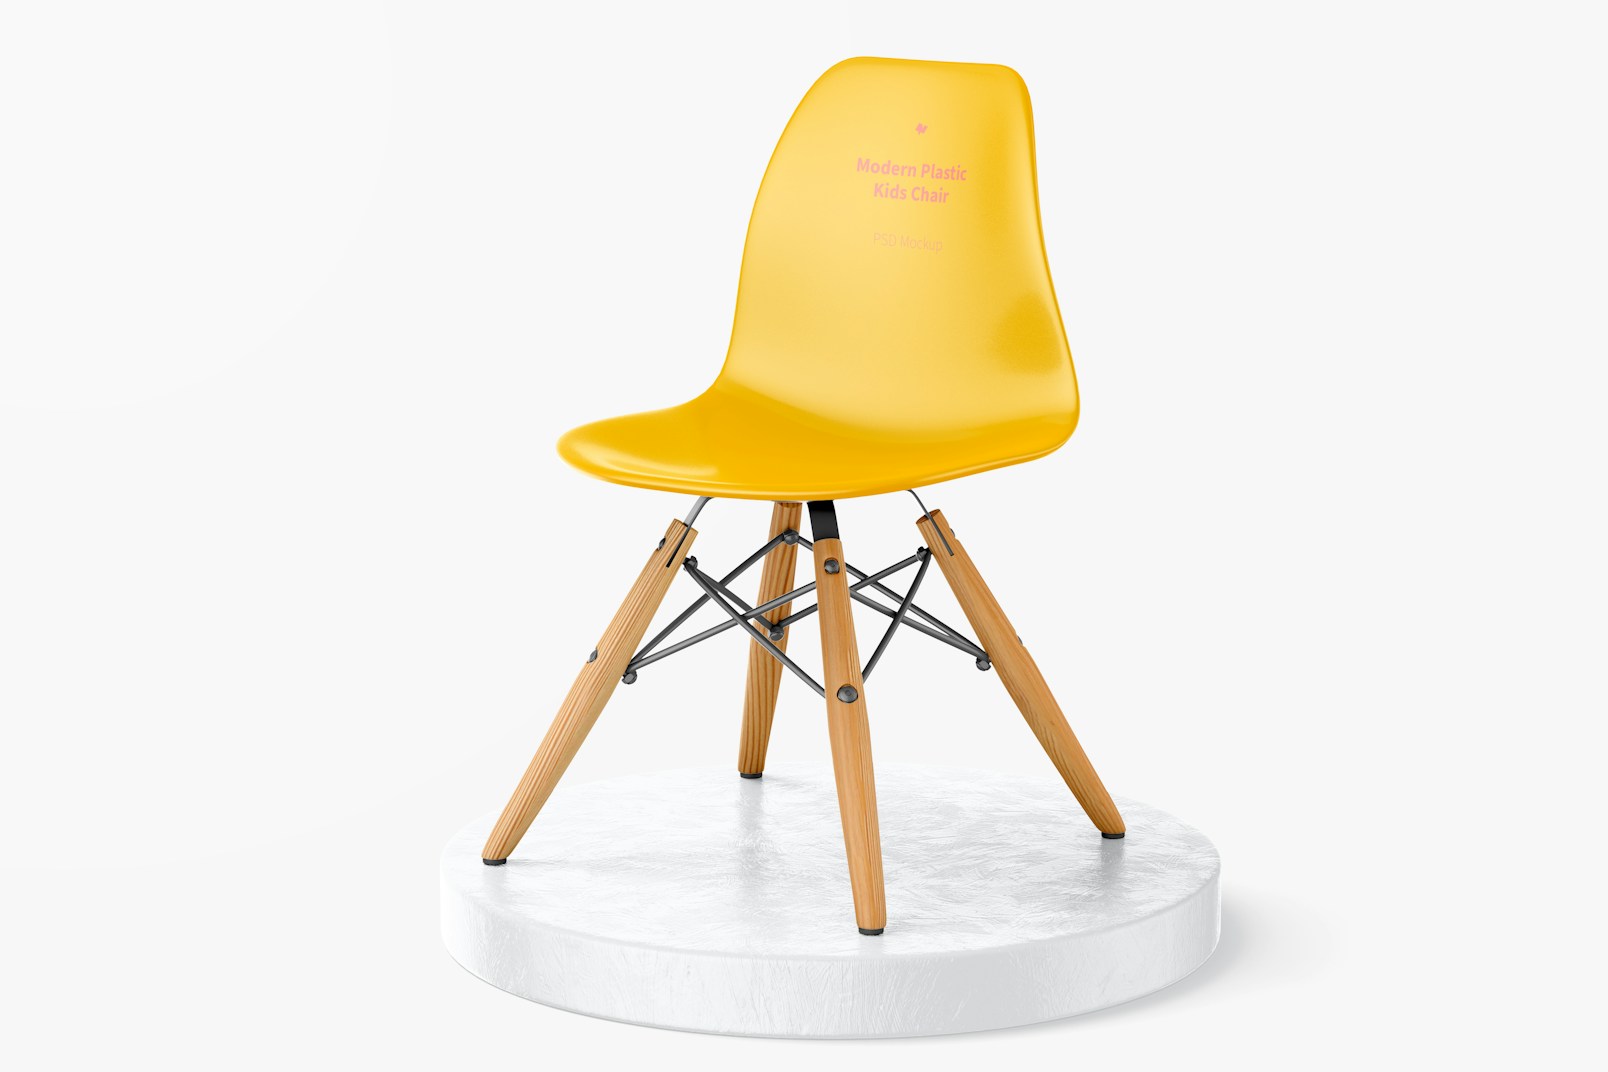 Modern Plastic Kids Chair Mockup, Left View